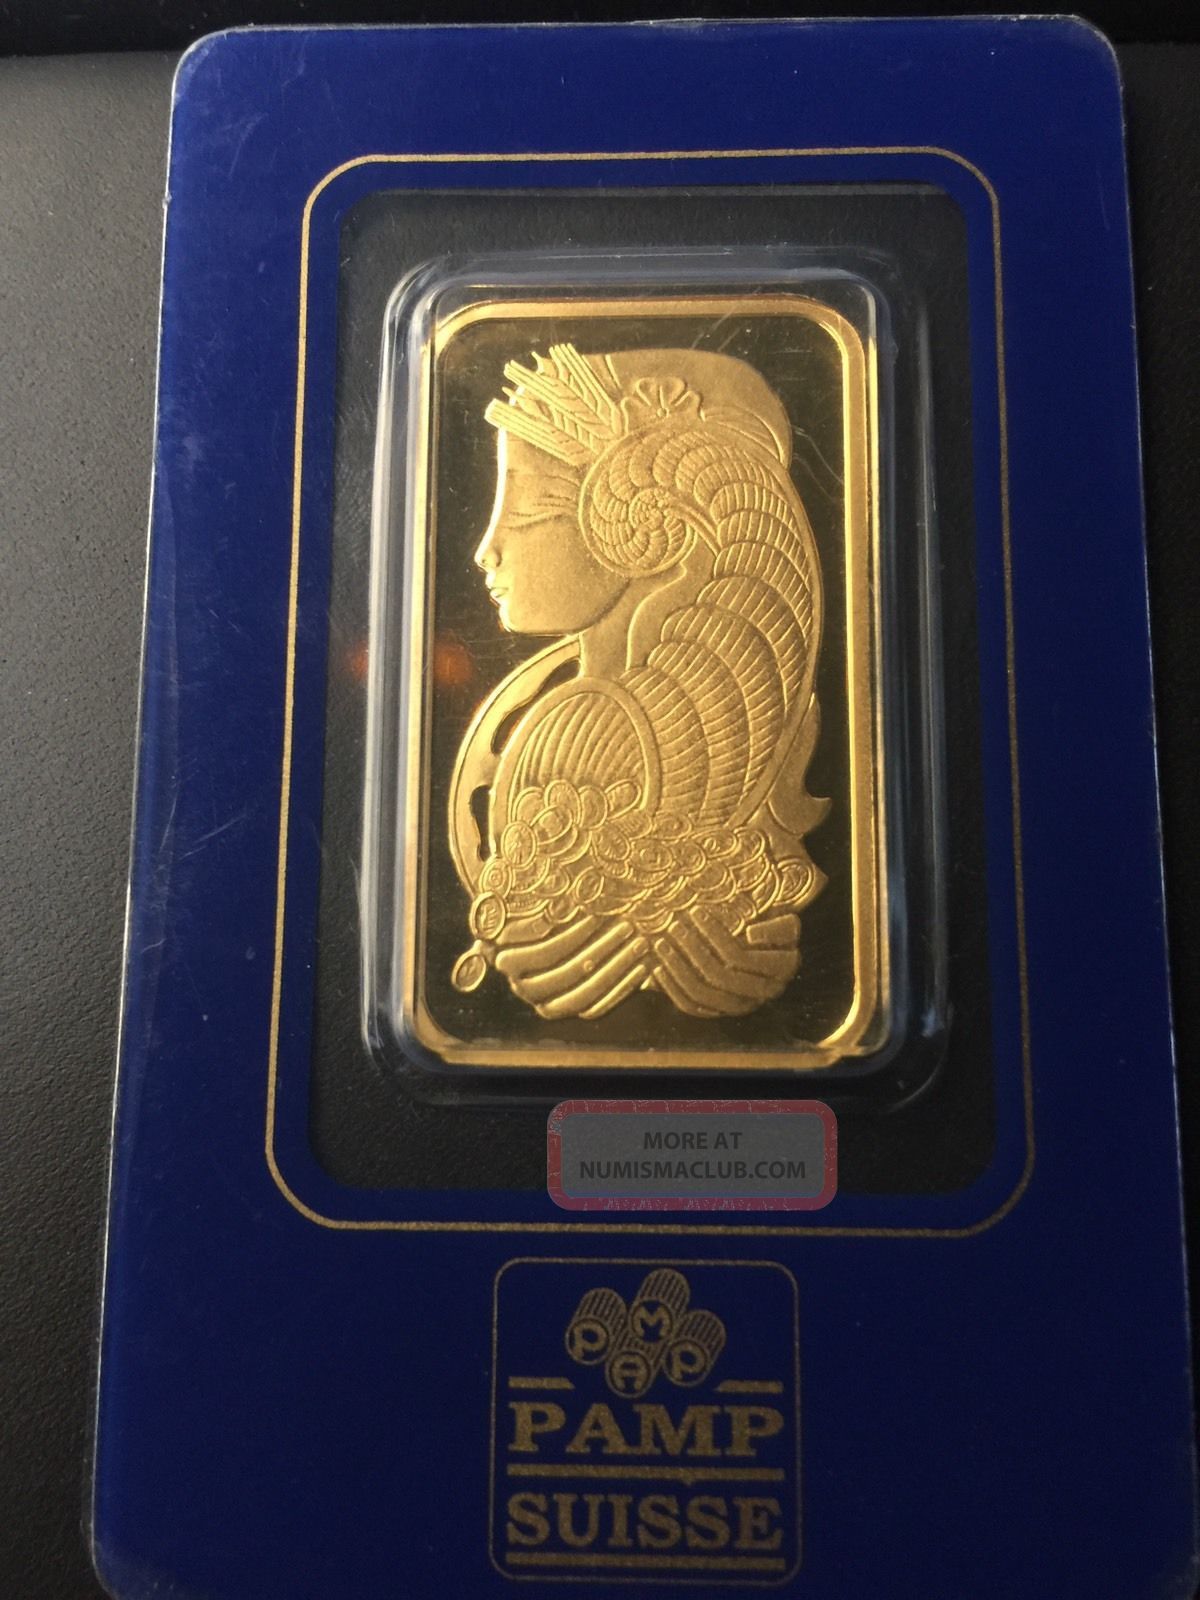 1 oz credit suisse gold bar in assay